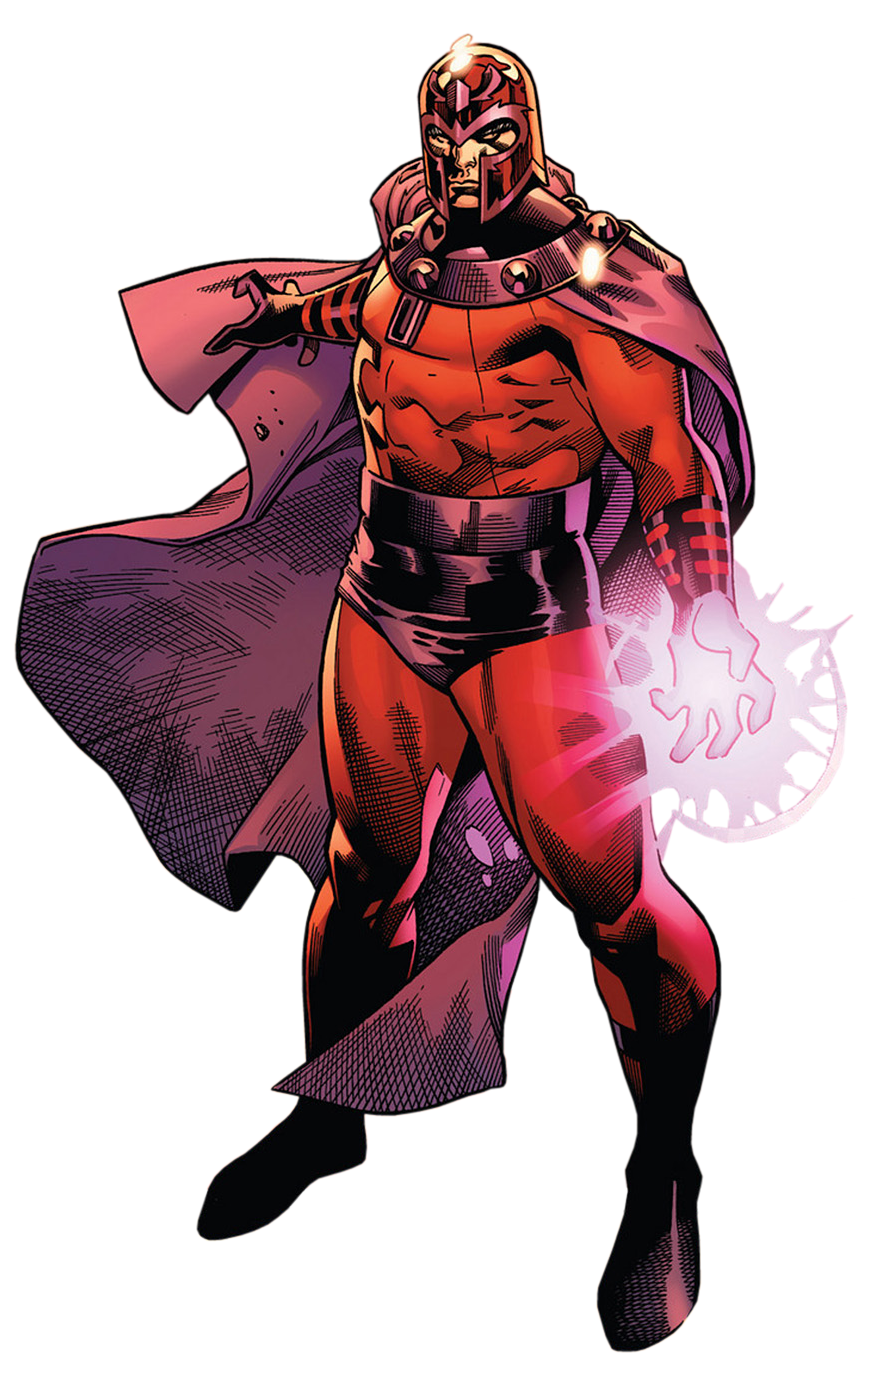 Magneto | Villains Wiki | Fandom powered by Wikia